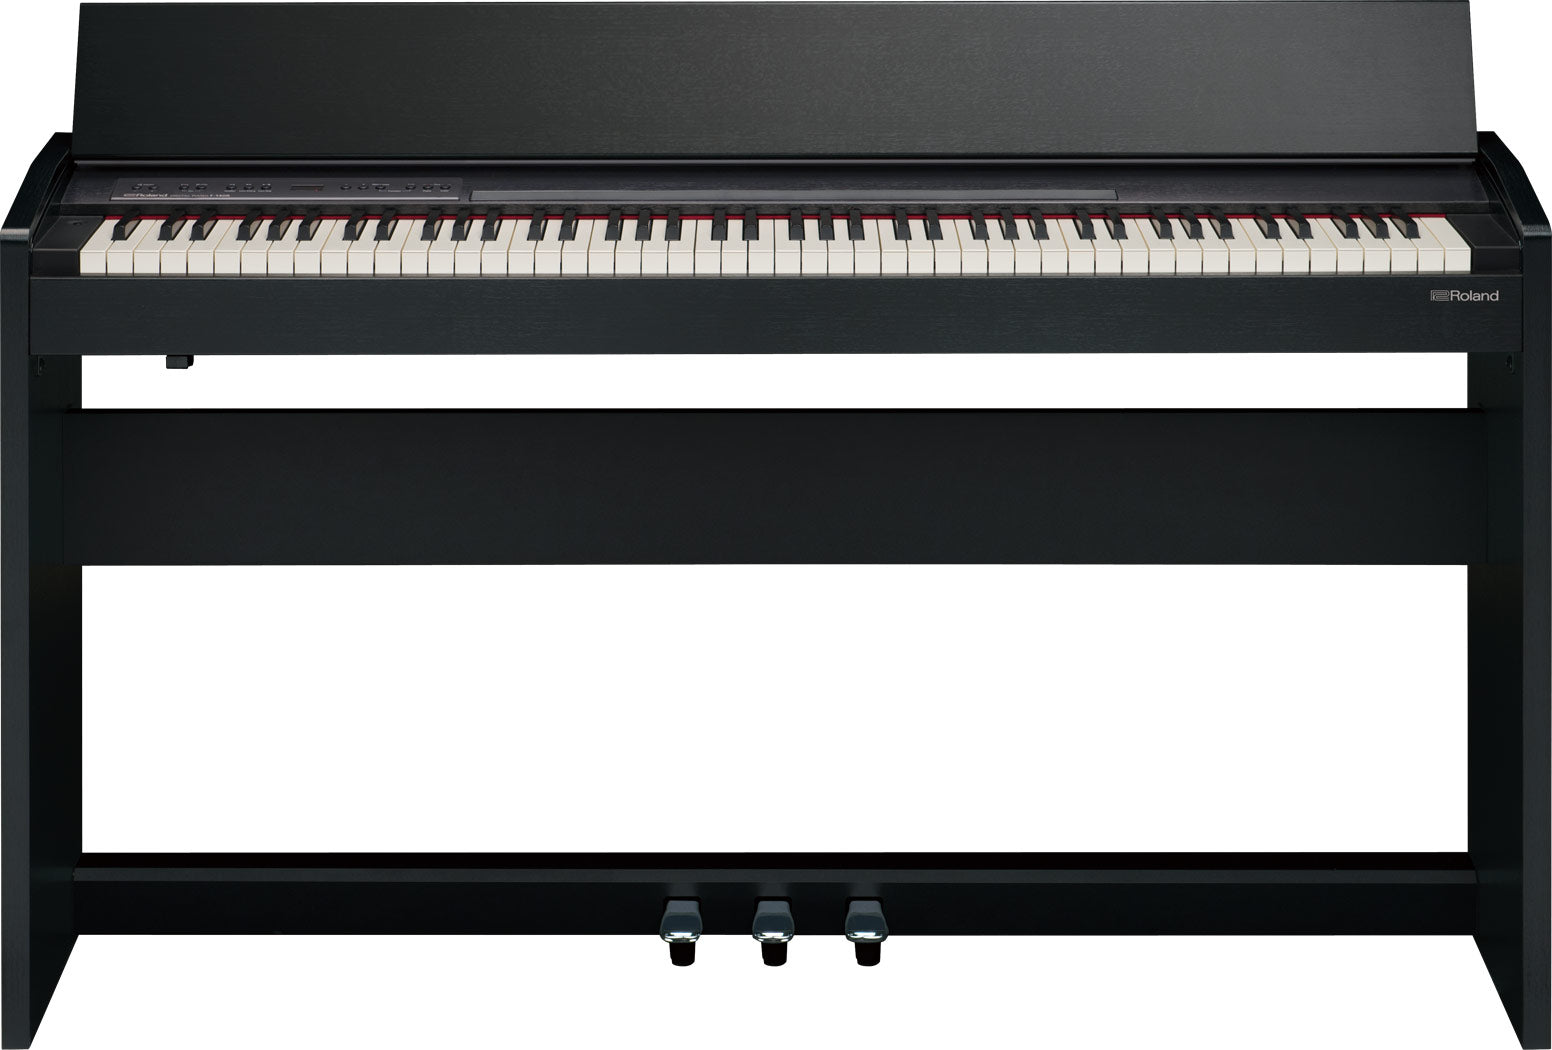 Roland F-140R 88-key Digital Home Piano with FREE RH-5 Headphone - Contemporary Black (F140R F 140R) [2 YEARS Warranty], ROLAND, DIGITAL PIANO, roland-digital-piano-f-140r-cb, ZOSO MUSIC SDN BHD